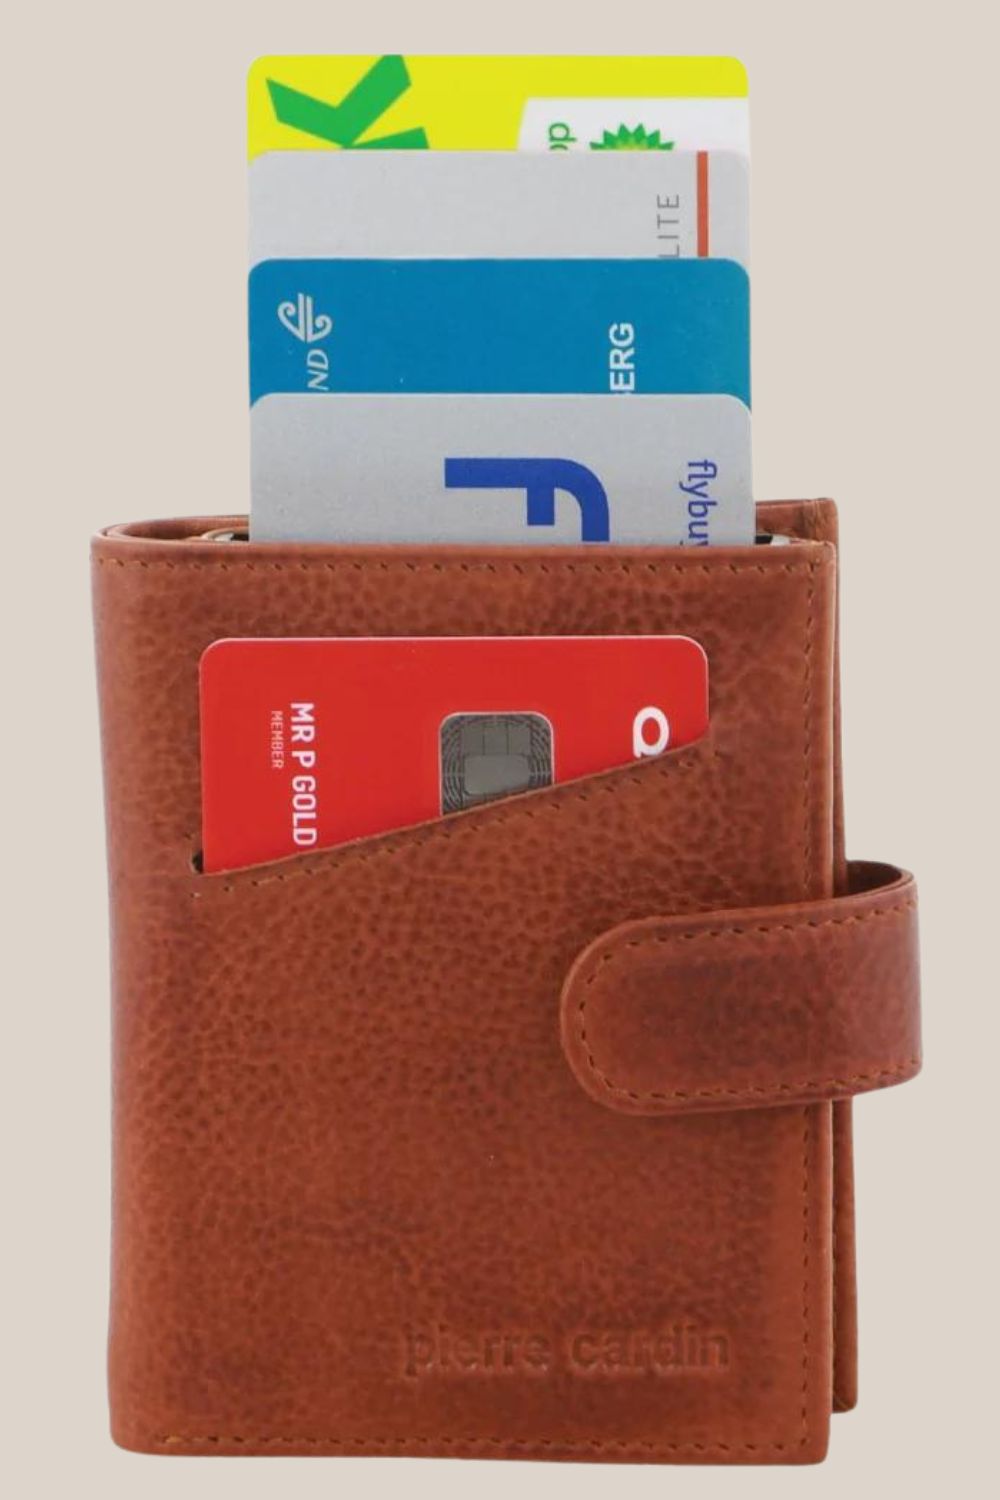 Pierre Cardin Leather Smart Slide Card Holder Tab Wallet